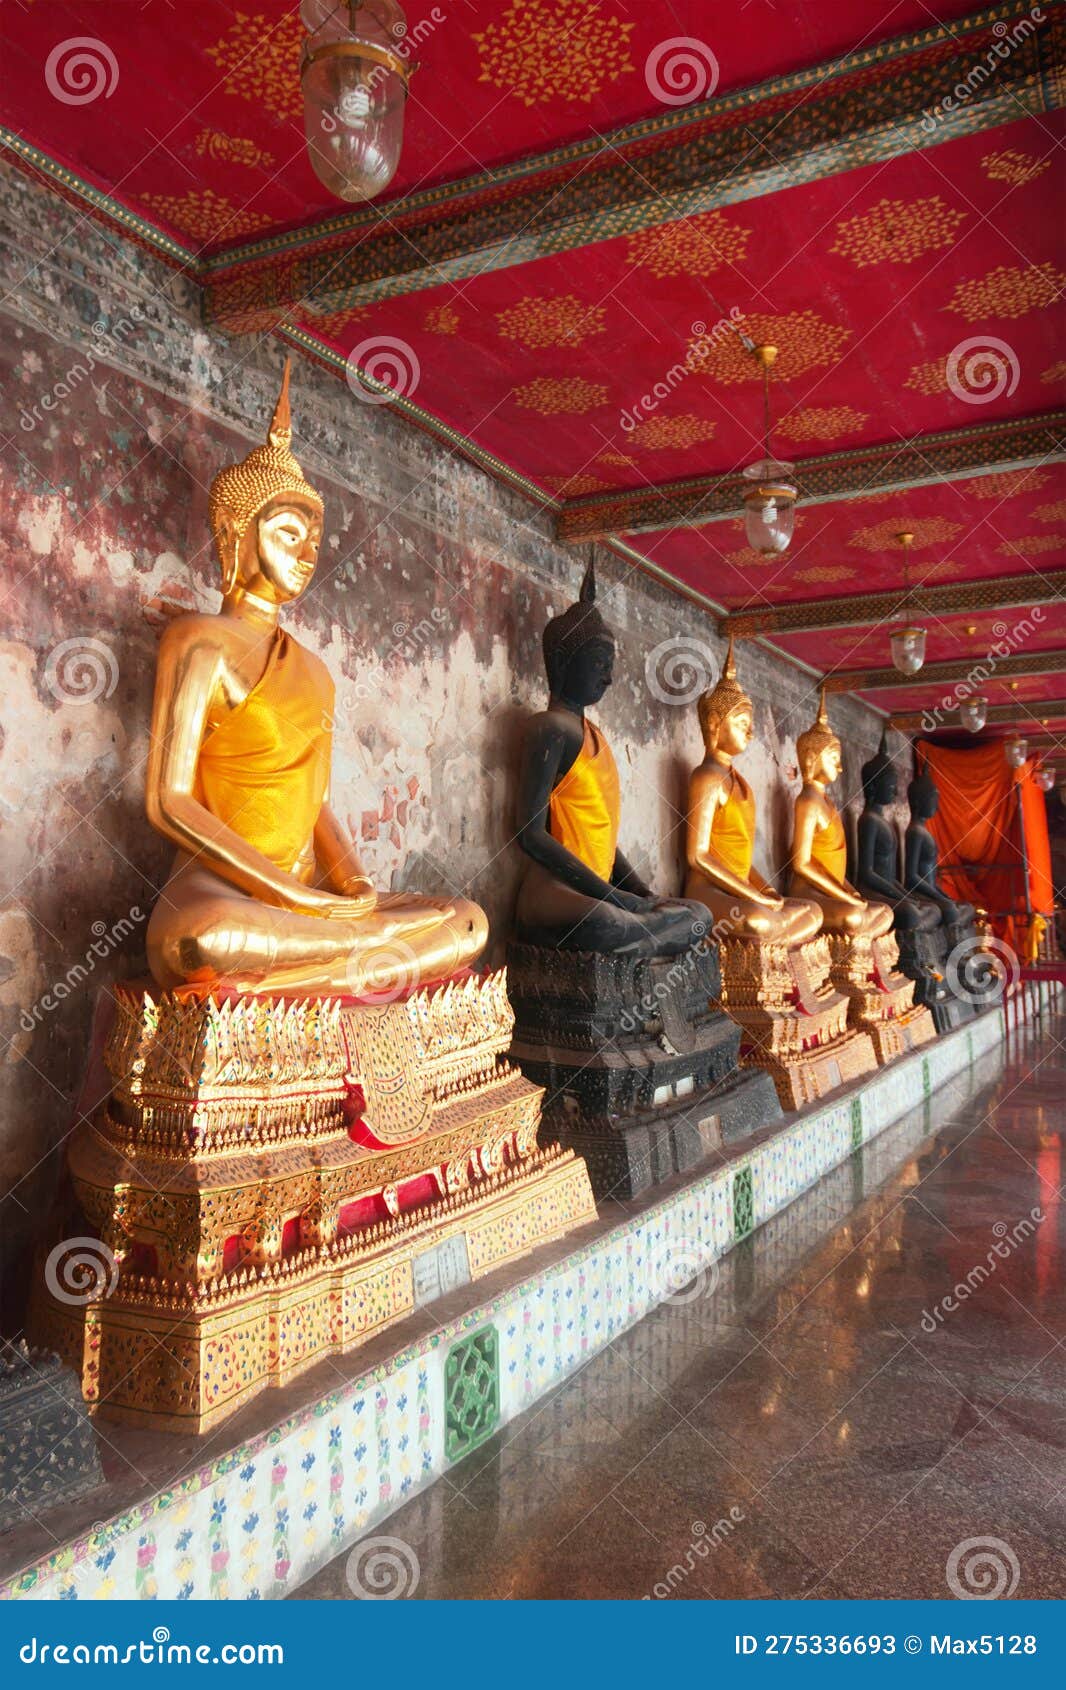 buddhist sanctuary